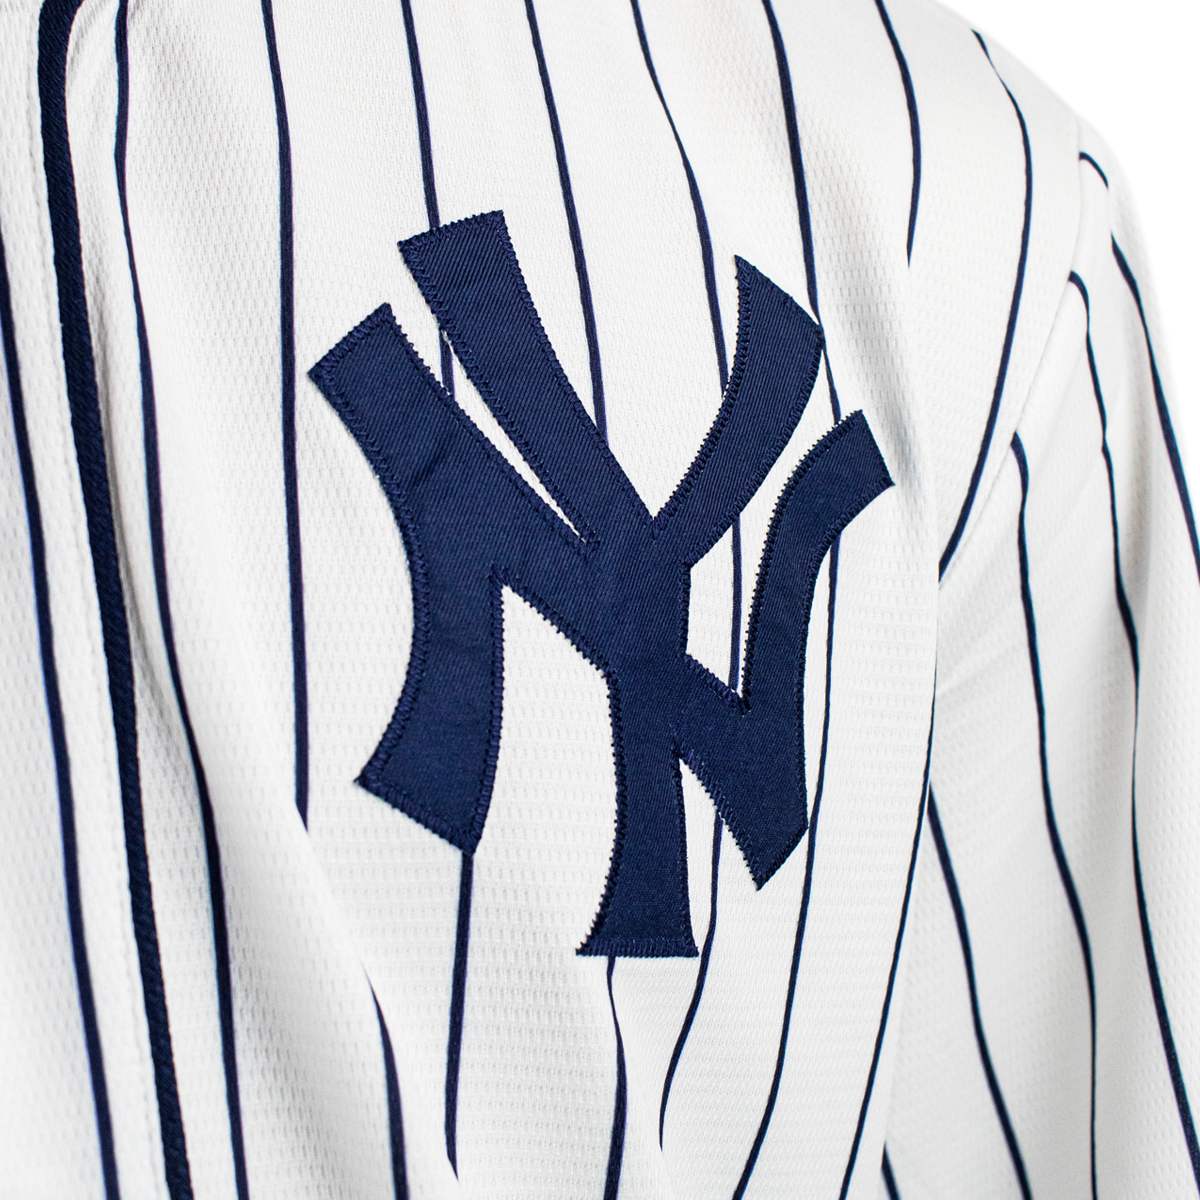 Fanatics New York Yankees MLB Core Foundation Jersey Trikot 007N-071R-NK-0IY-